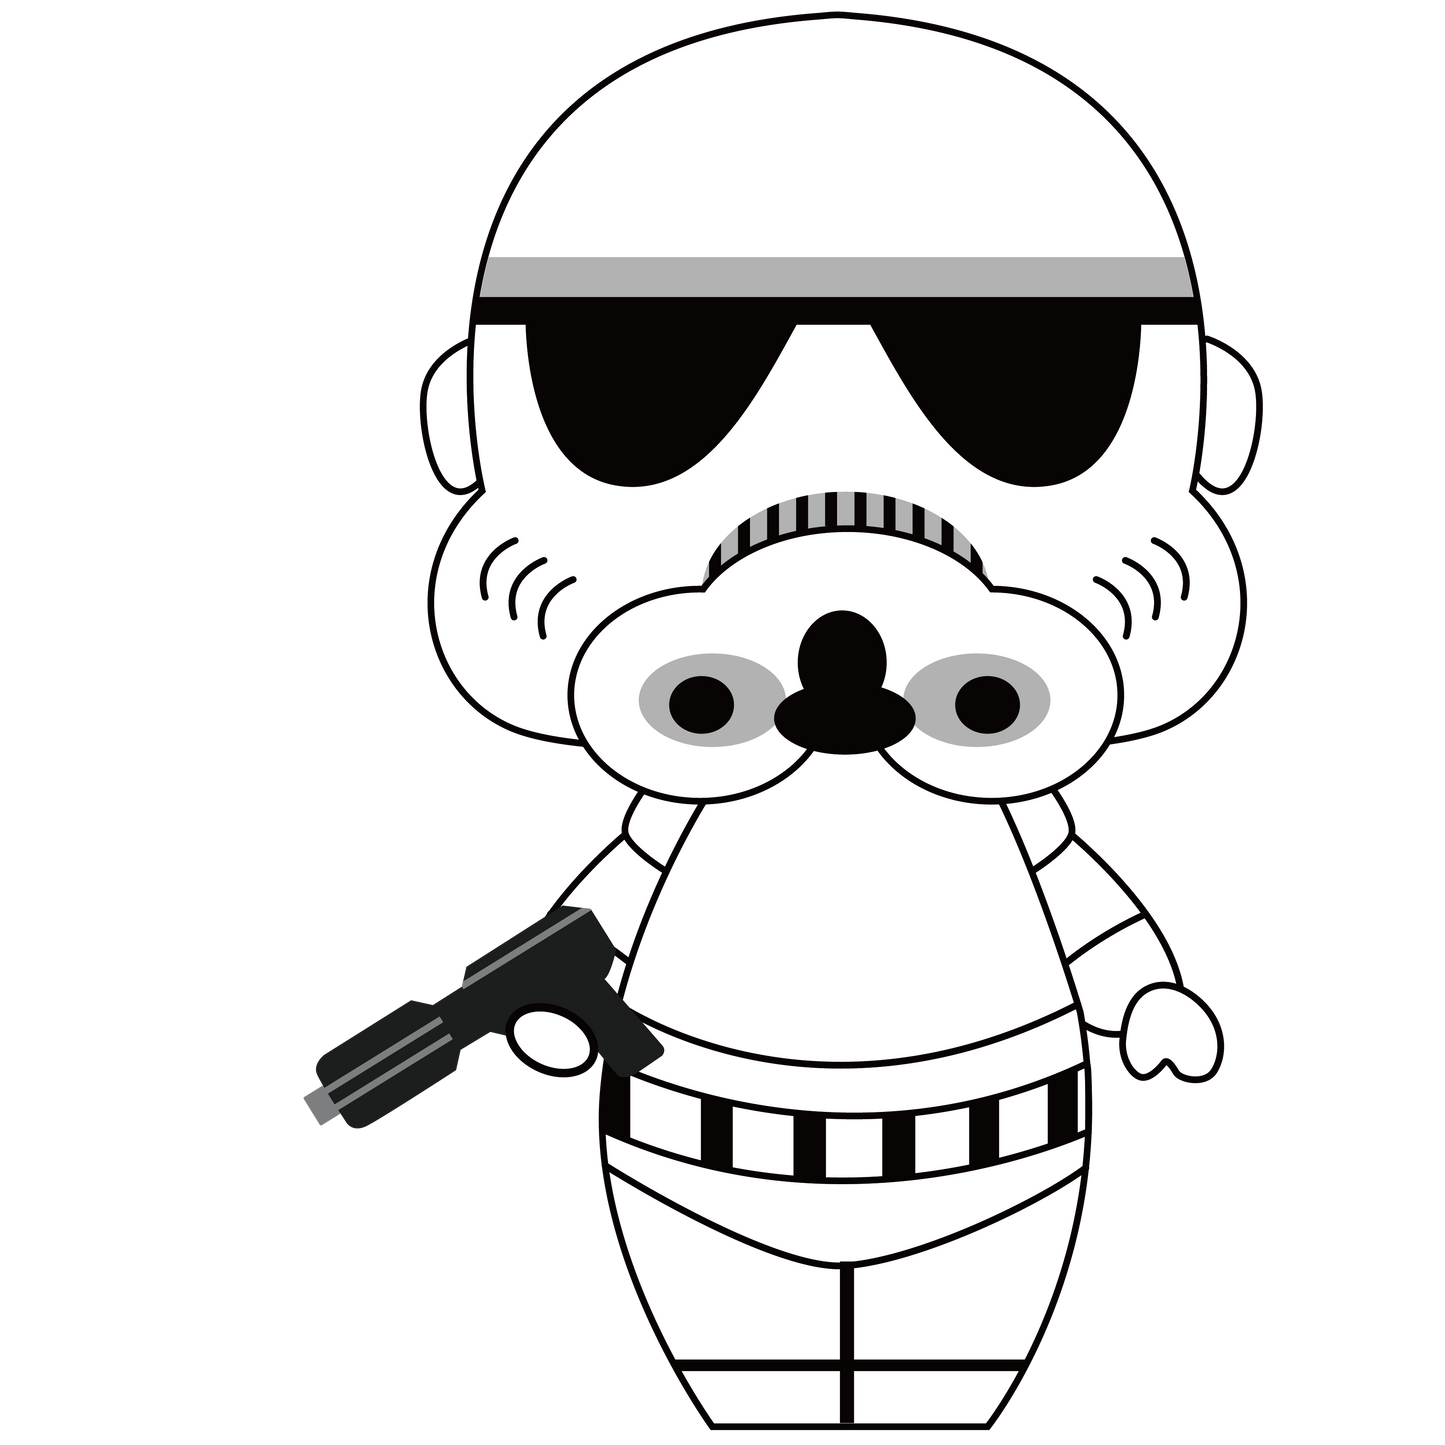 Space Wars storm trooper cookie cutter